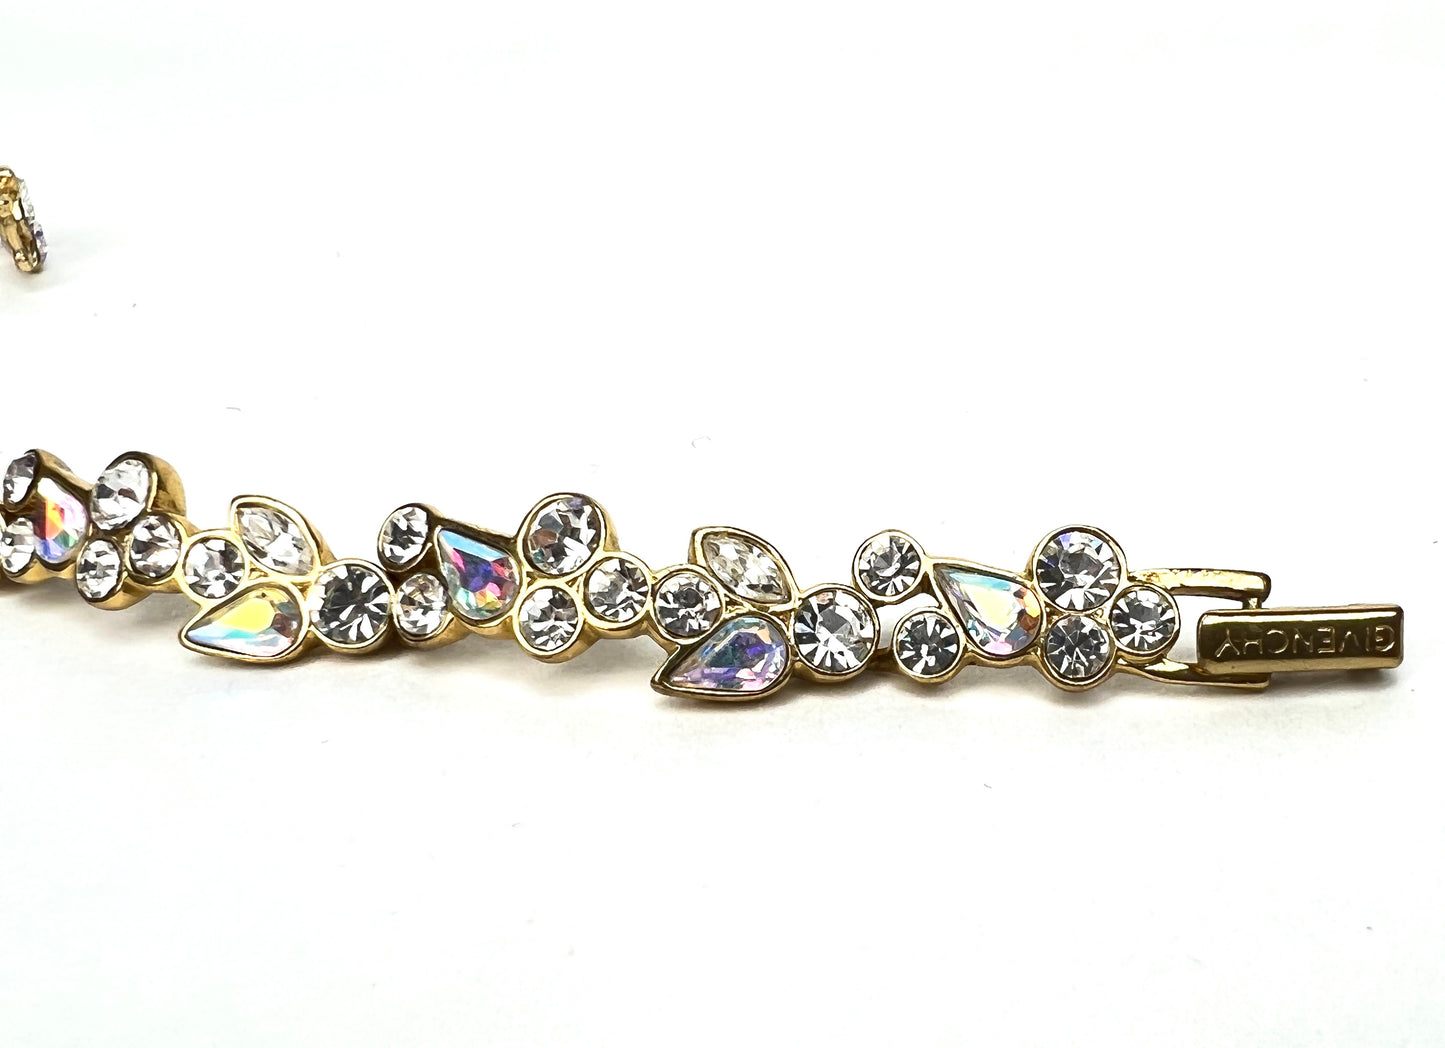 GIVENCHY Vintage Bracelet Gold w/ Opalescent Teardrop & Chaton Crystals GIV-097